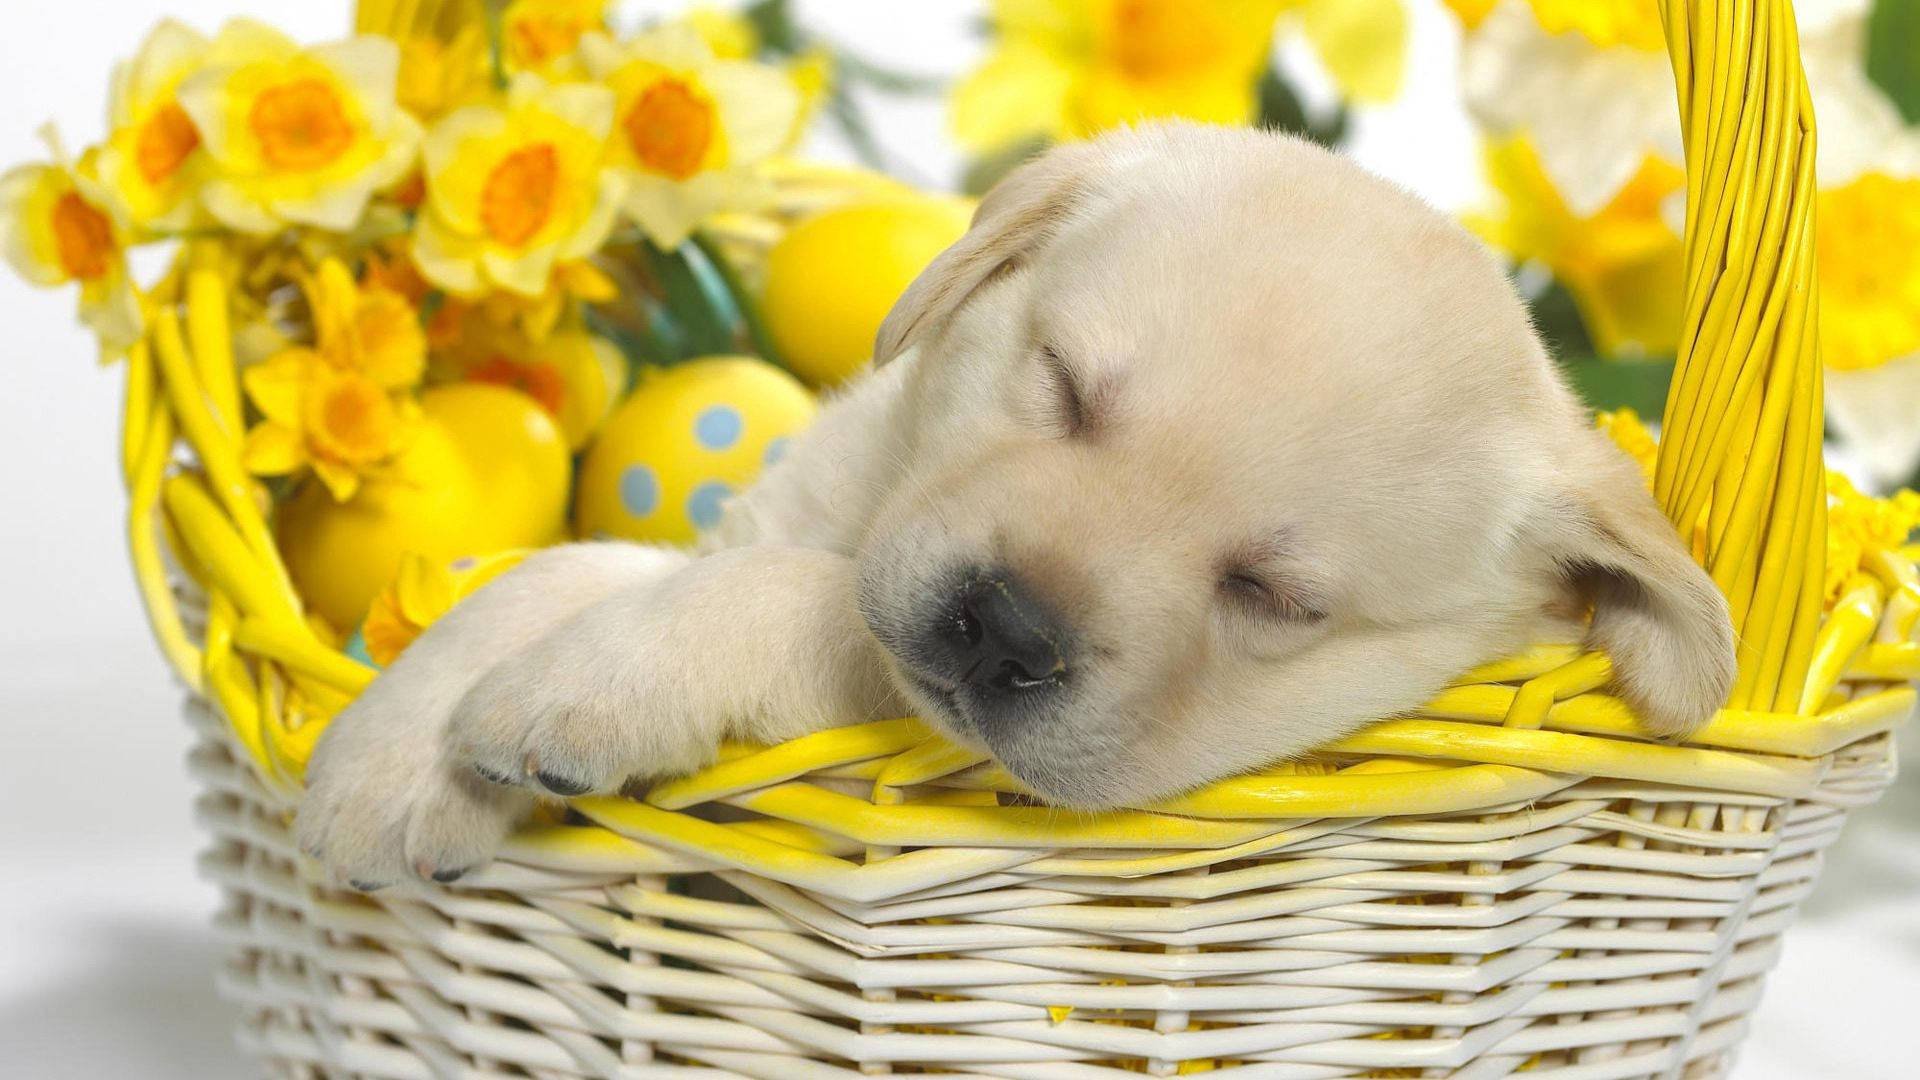 Sleeping Puppy In A Basket Background